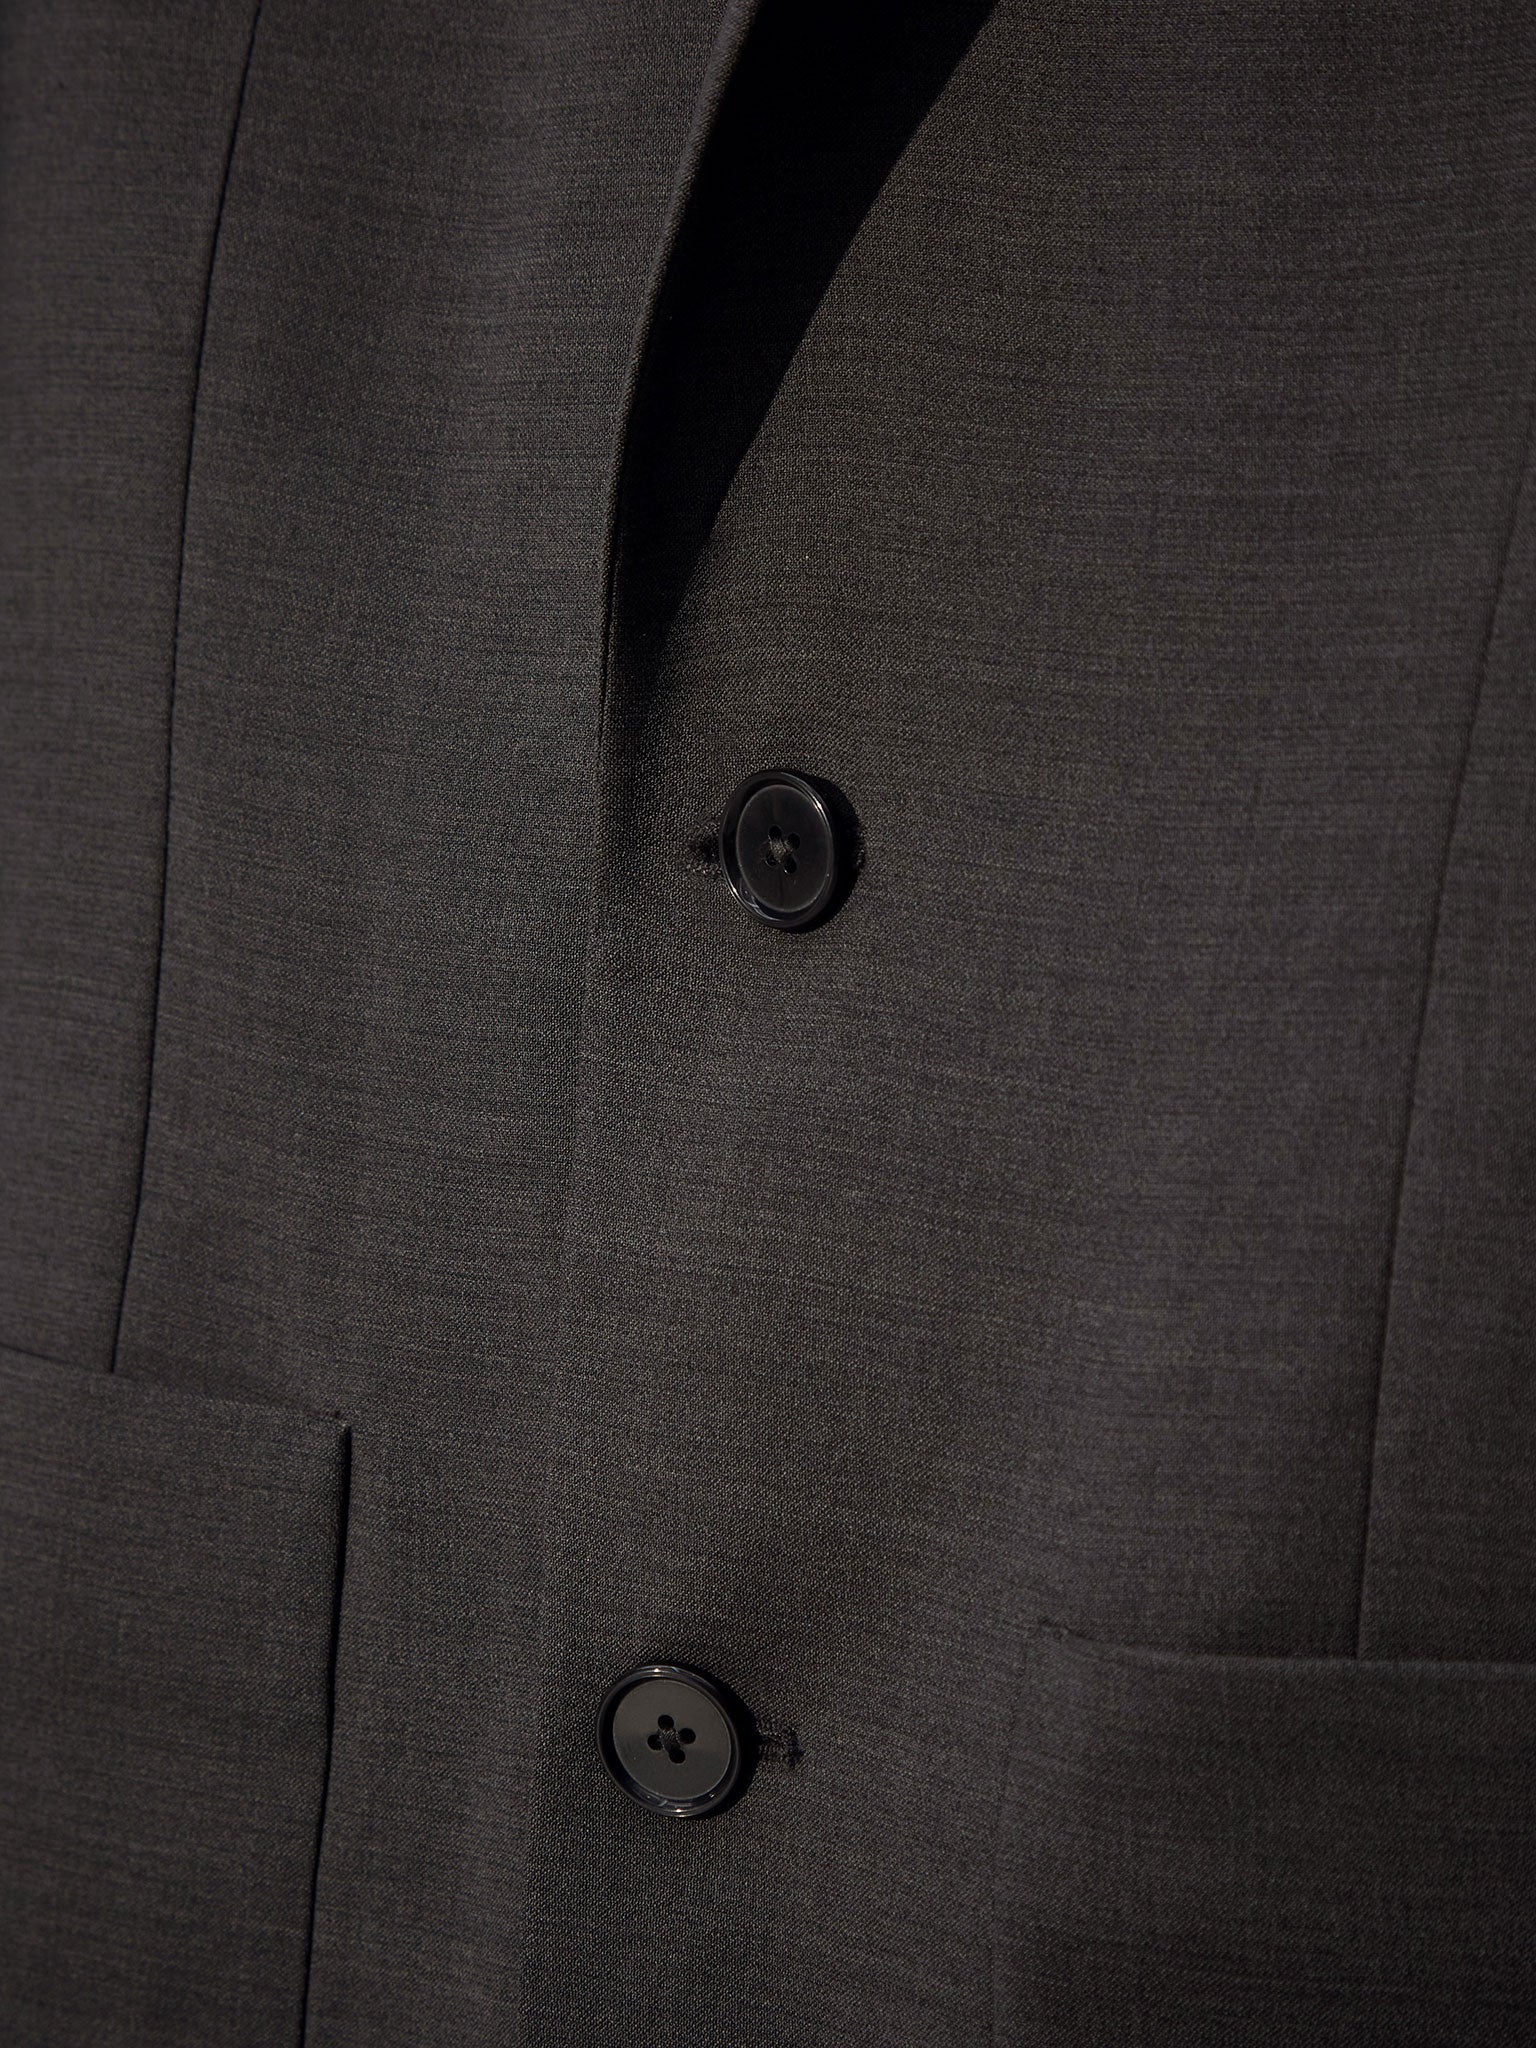 Versatile mens grey travel blazer with lightweight fabric and smooth lining